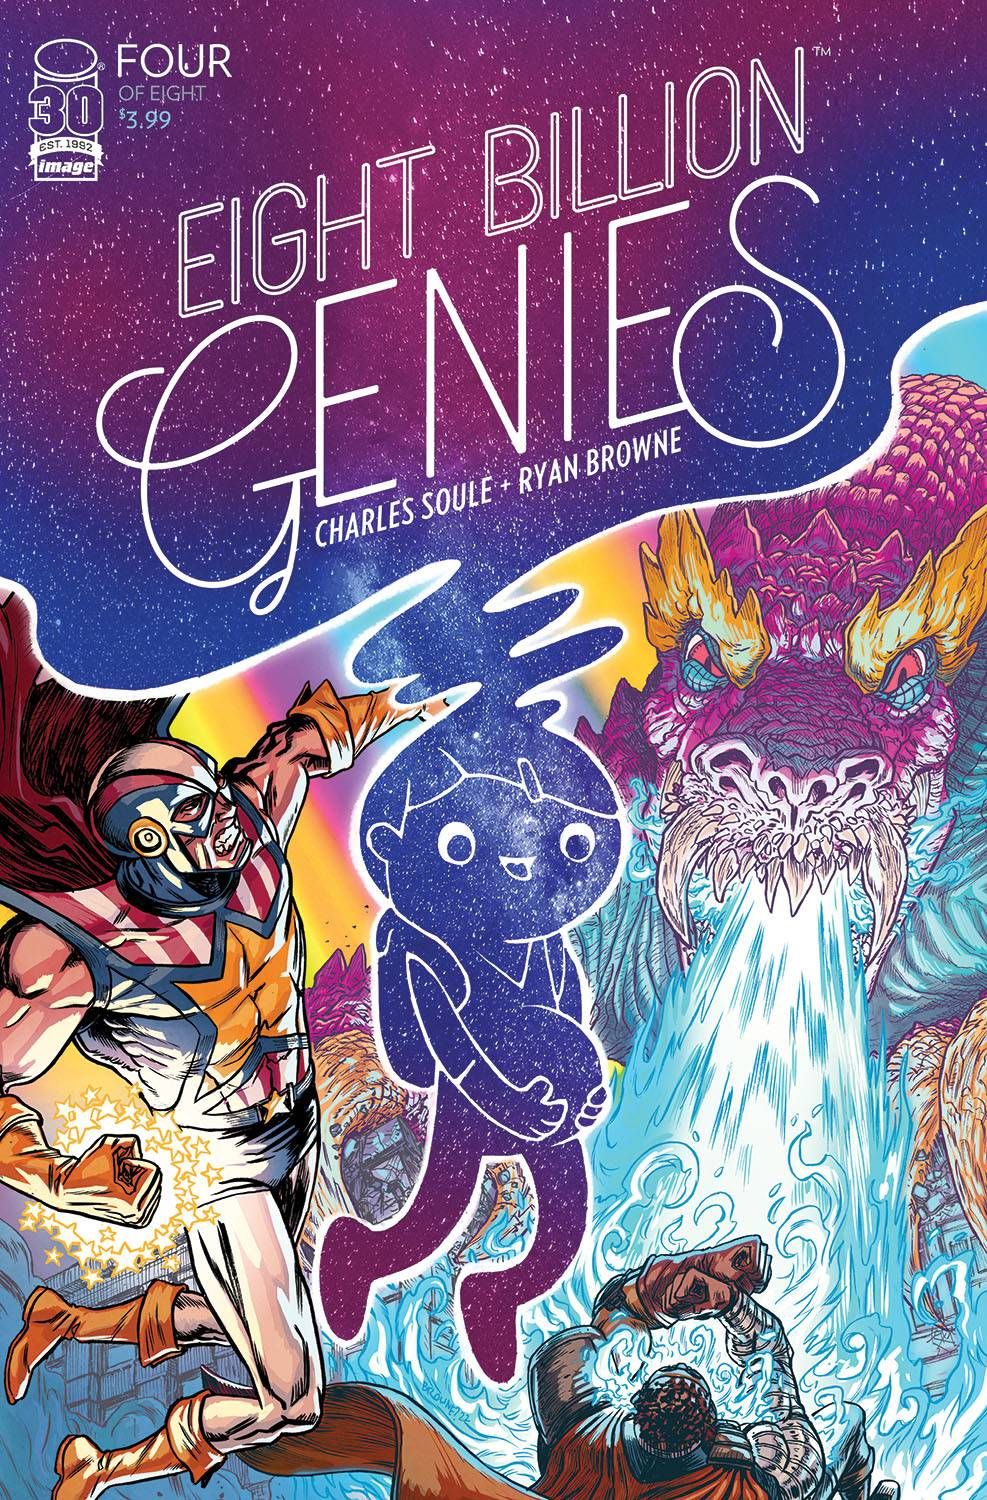 Eight Billion Genies #4 Comic